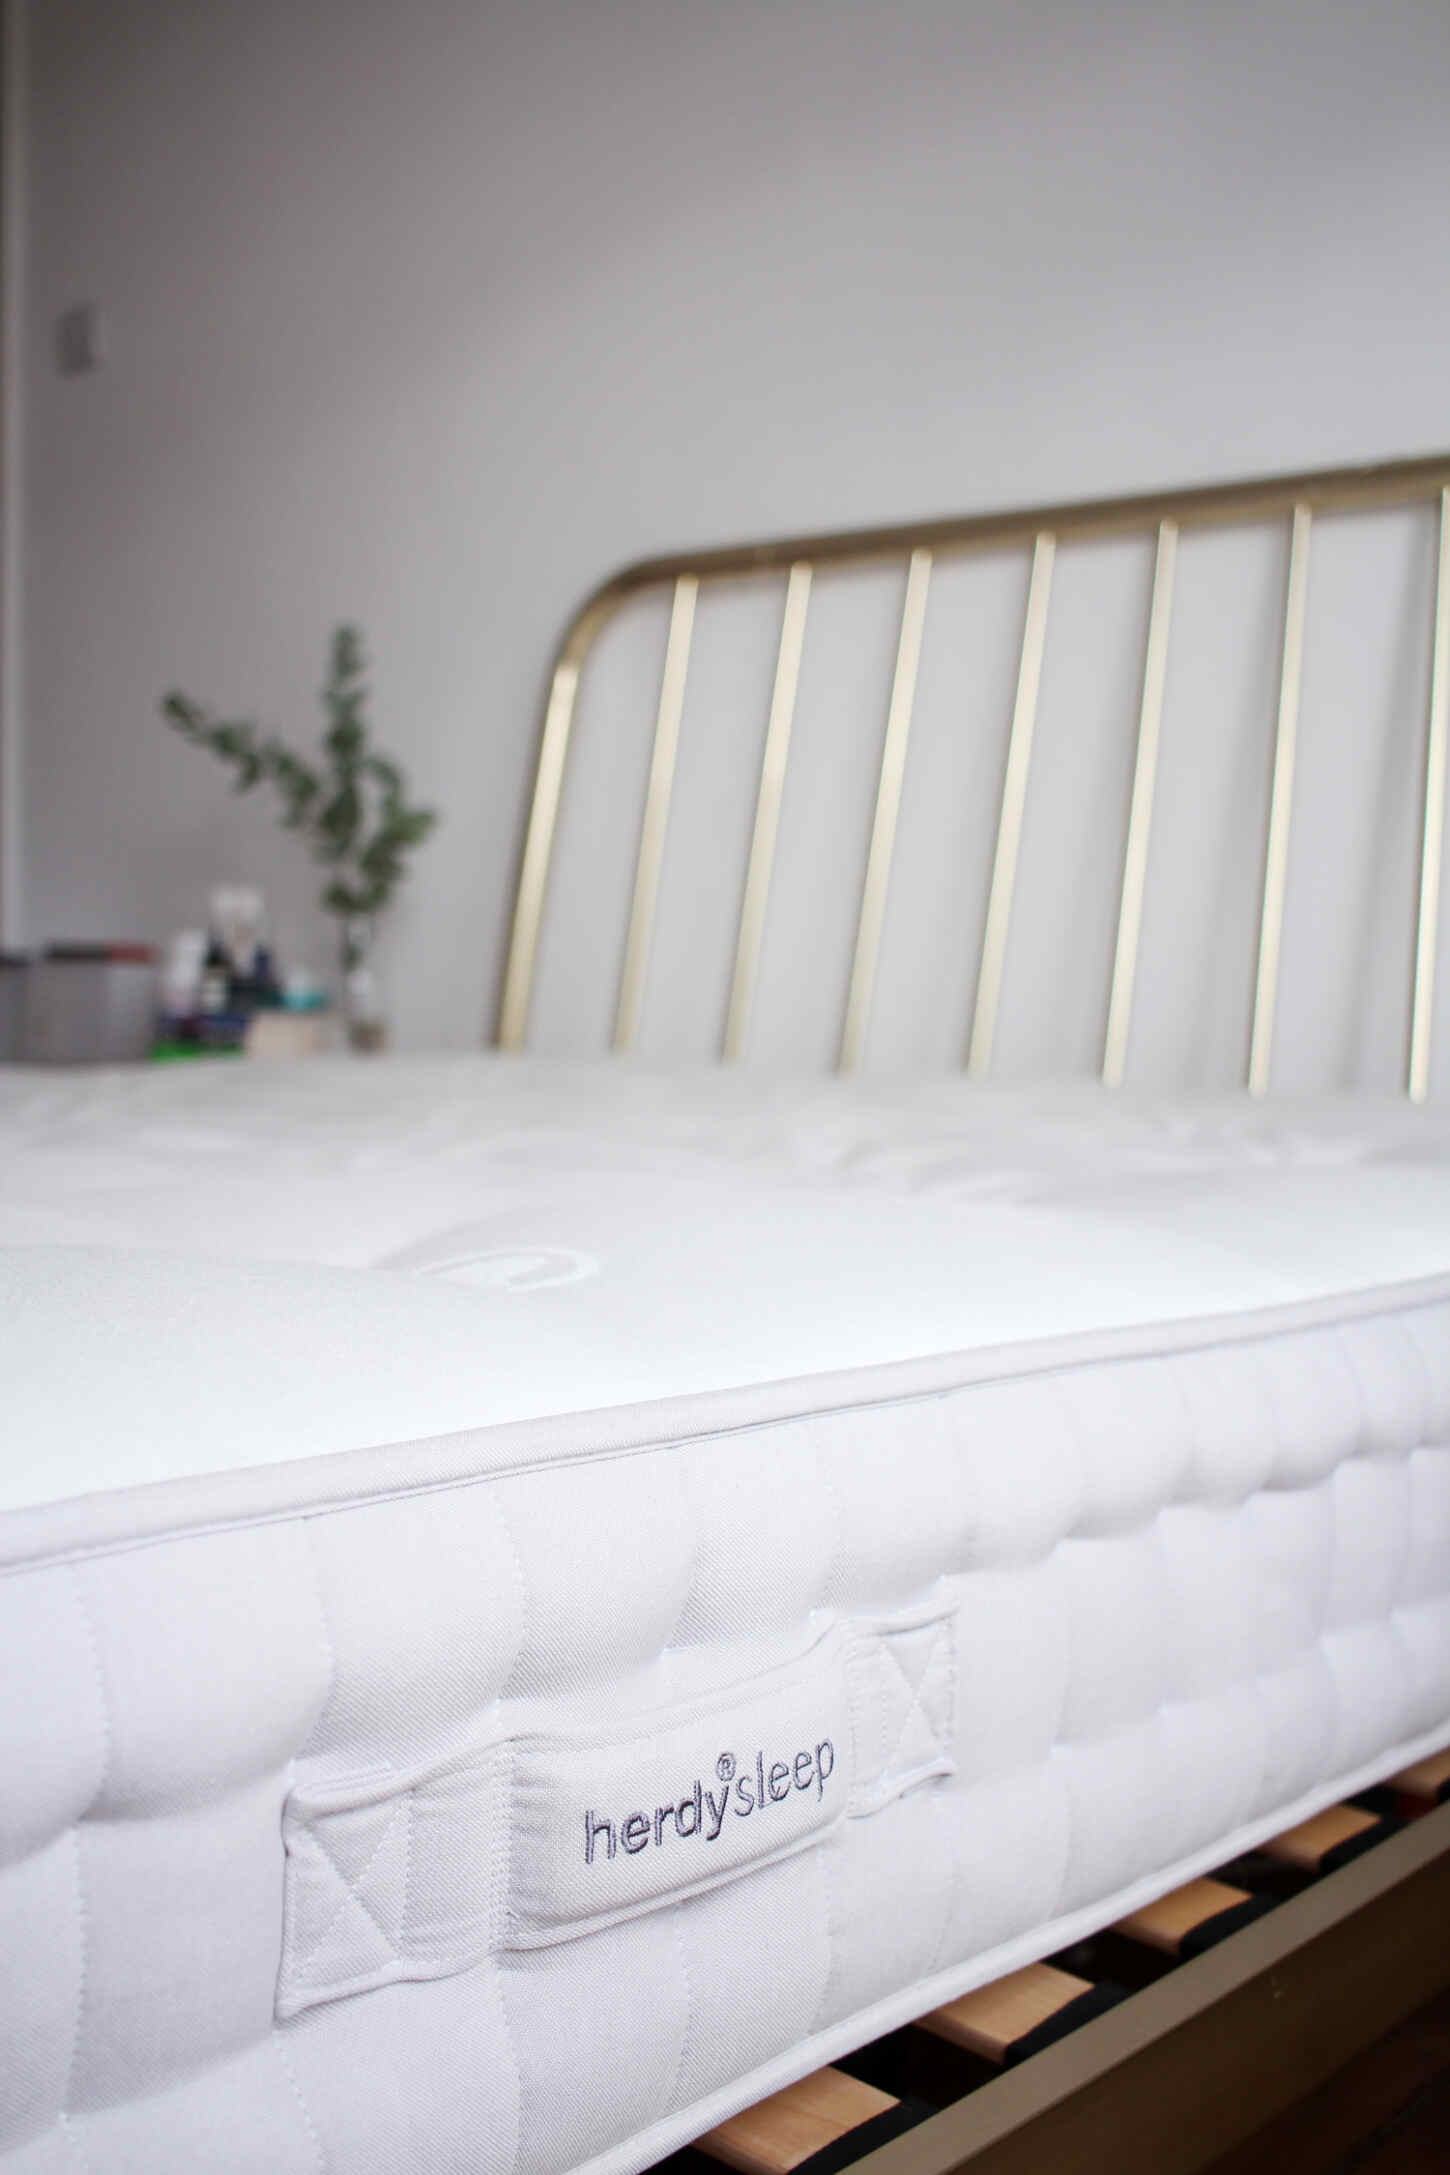 herdy-sleep-mattress-review-bedroom-interiors-blog-1